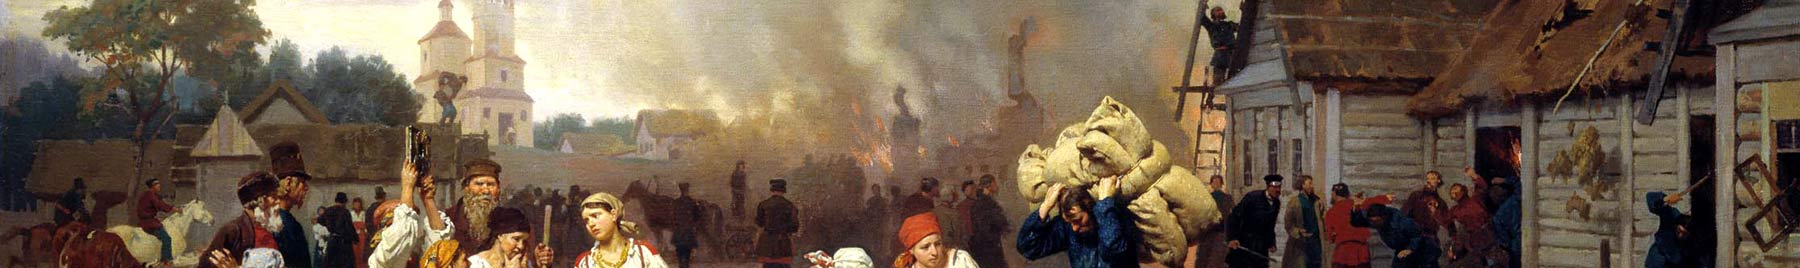 Detail from Nikolai Dmitriev-Orenburgsky, The Fire in the village